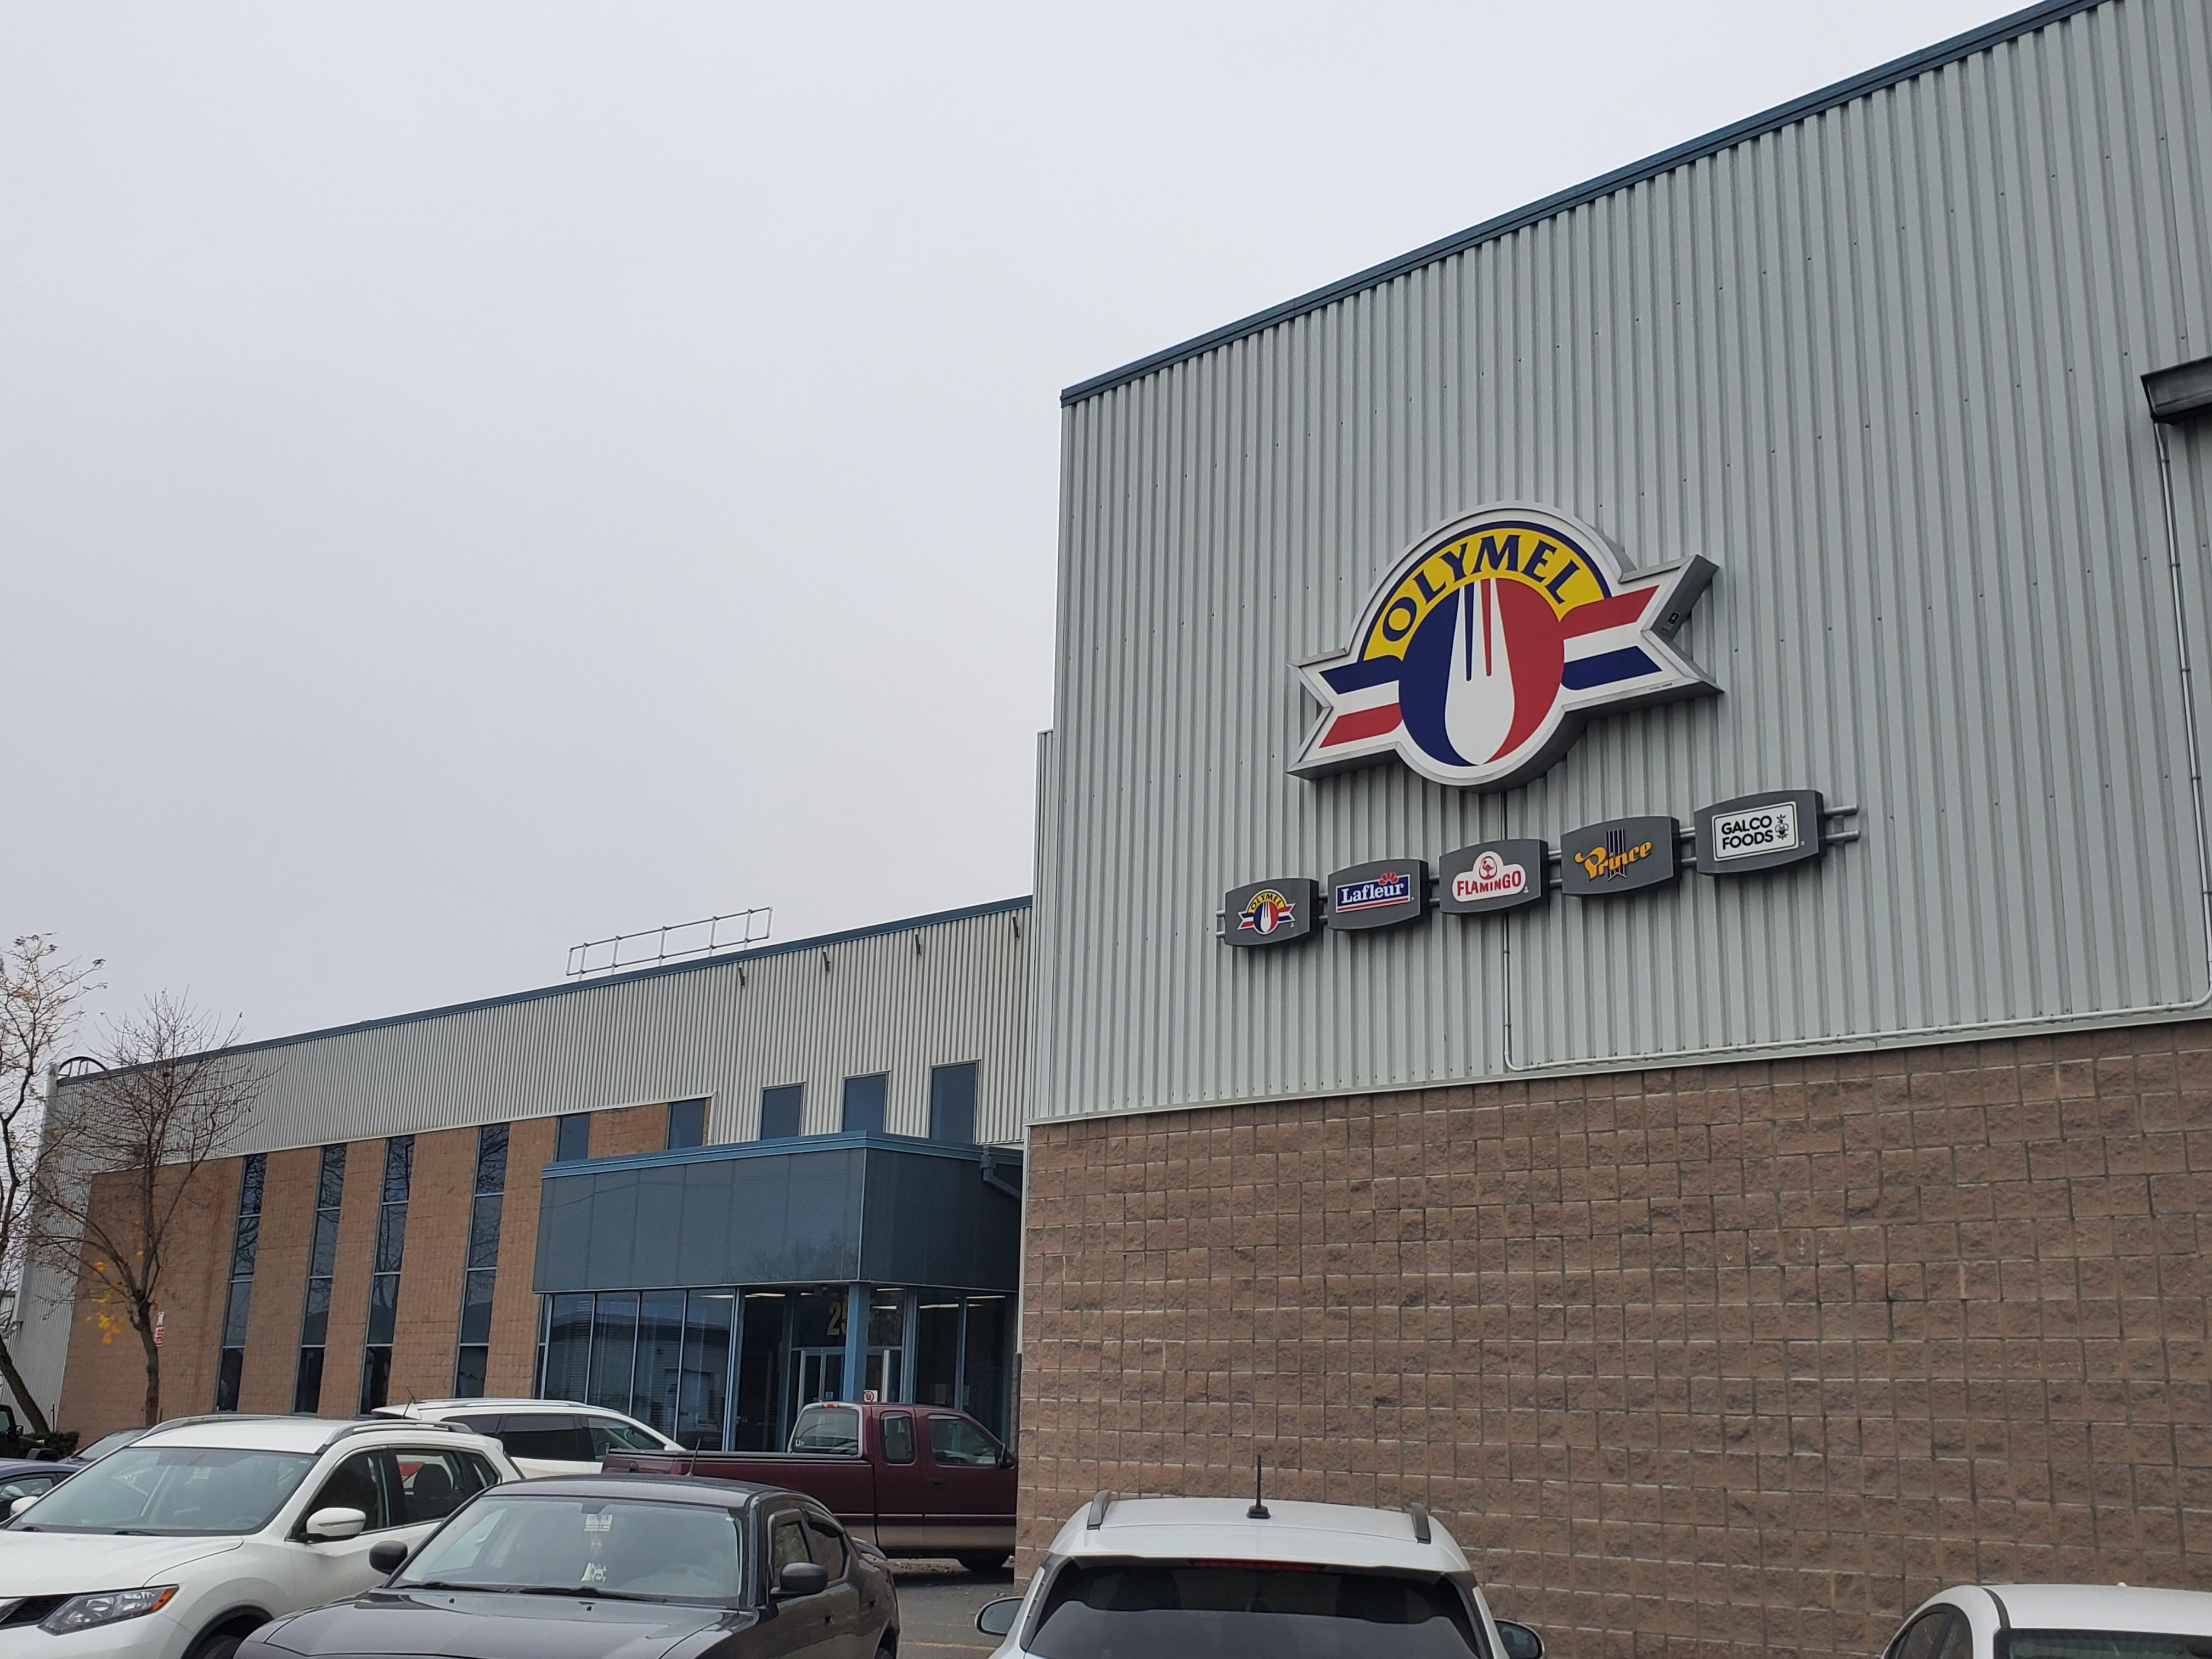 Cette usine de Drummondville priorise une protection antichute collective.